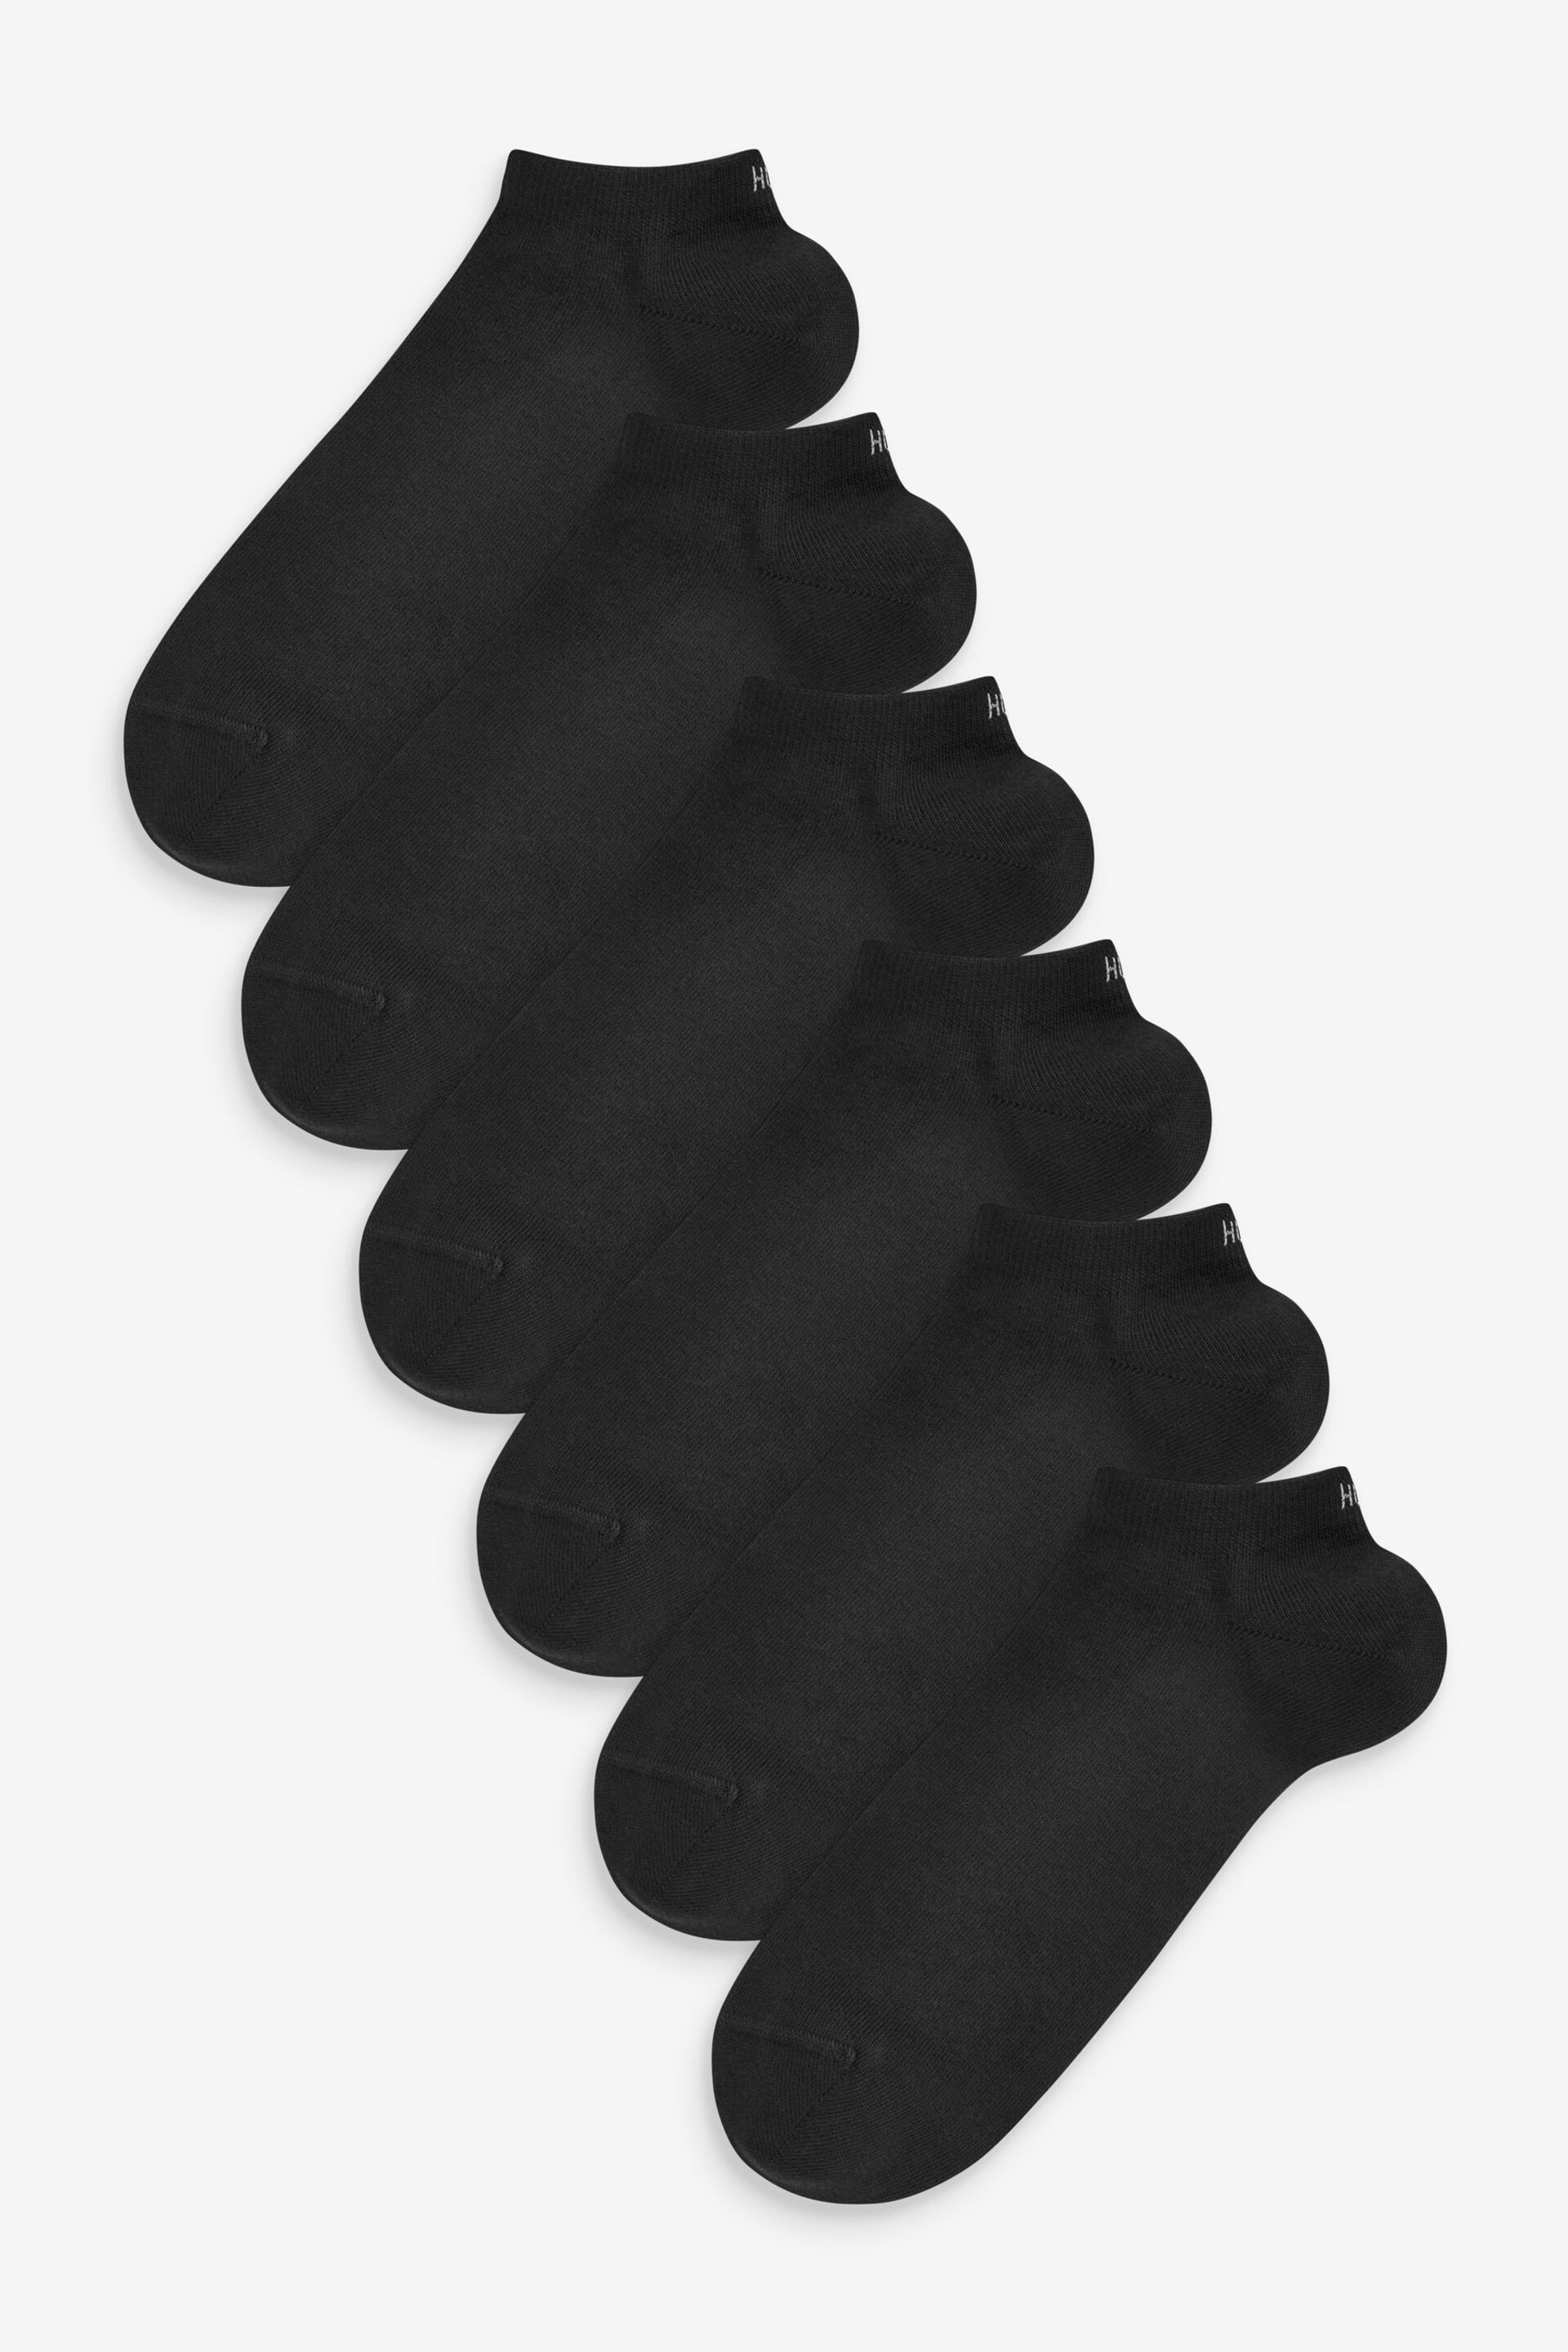 HUGO 6-Pack Ankle Black Socks - Image 1 of 2